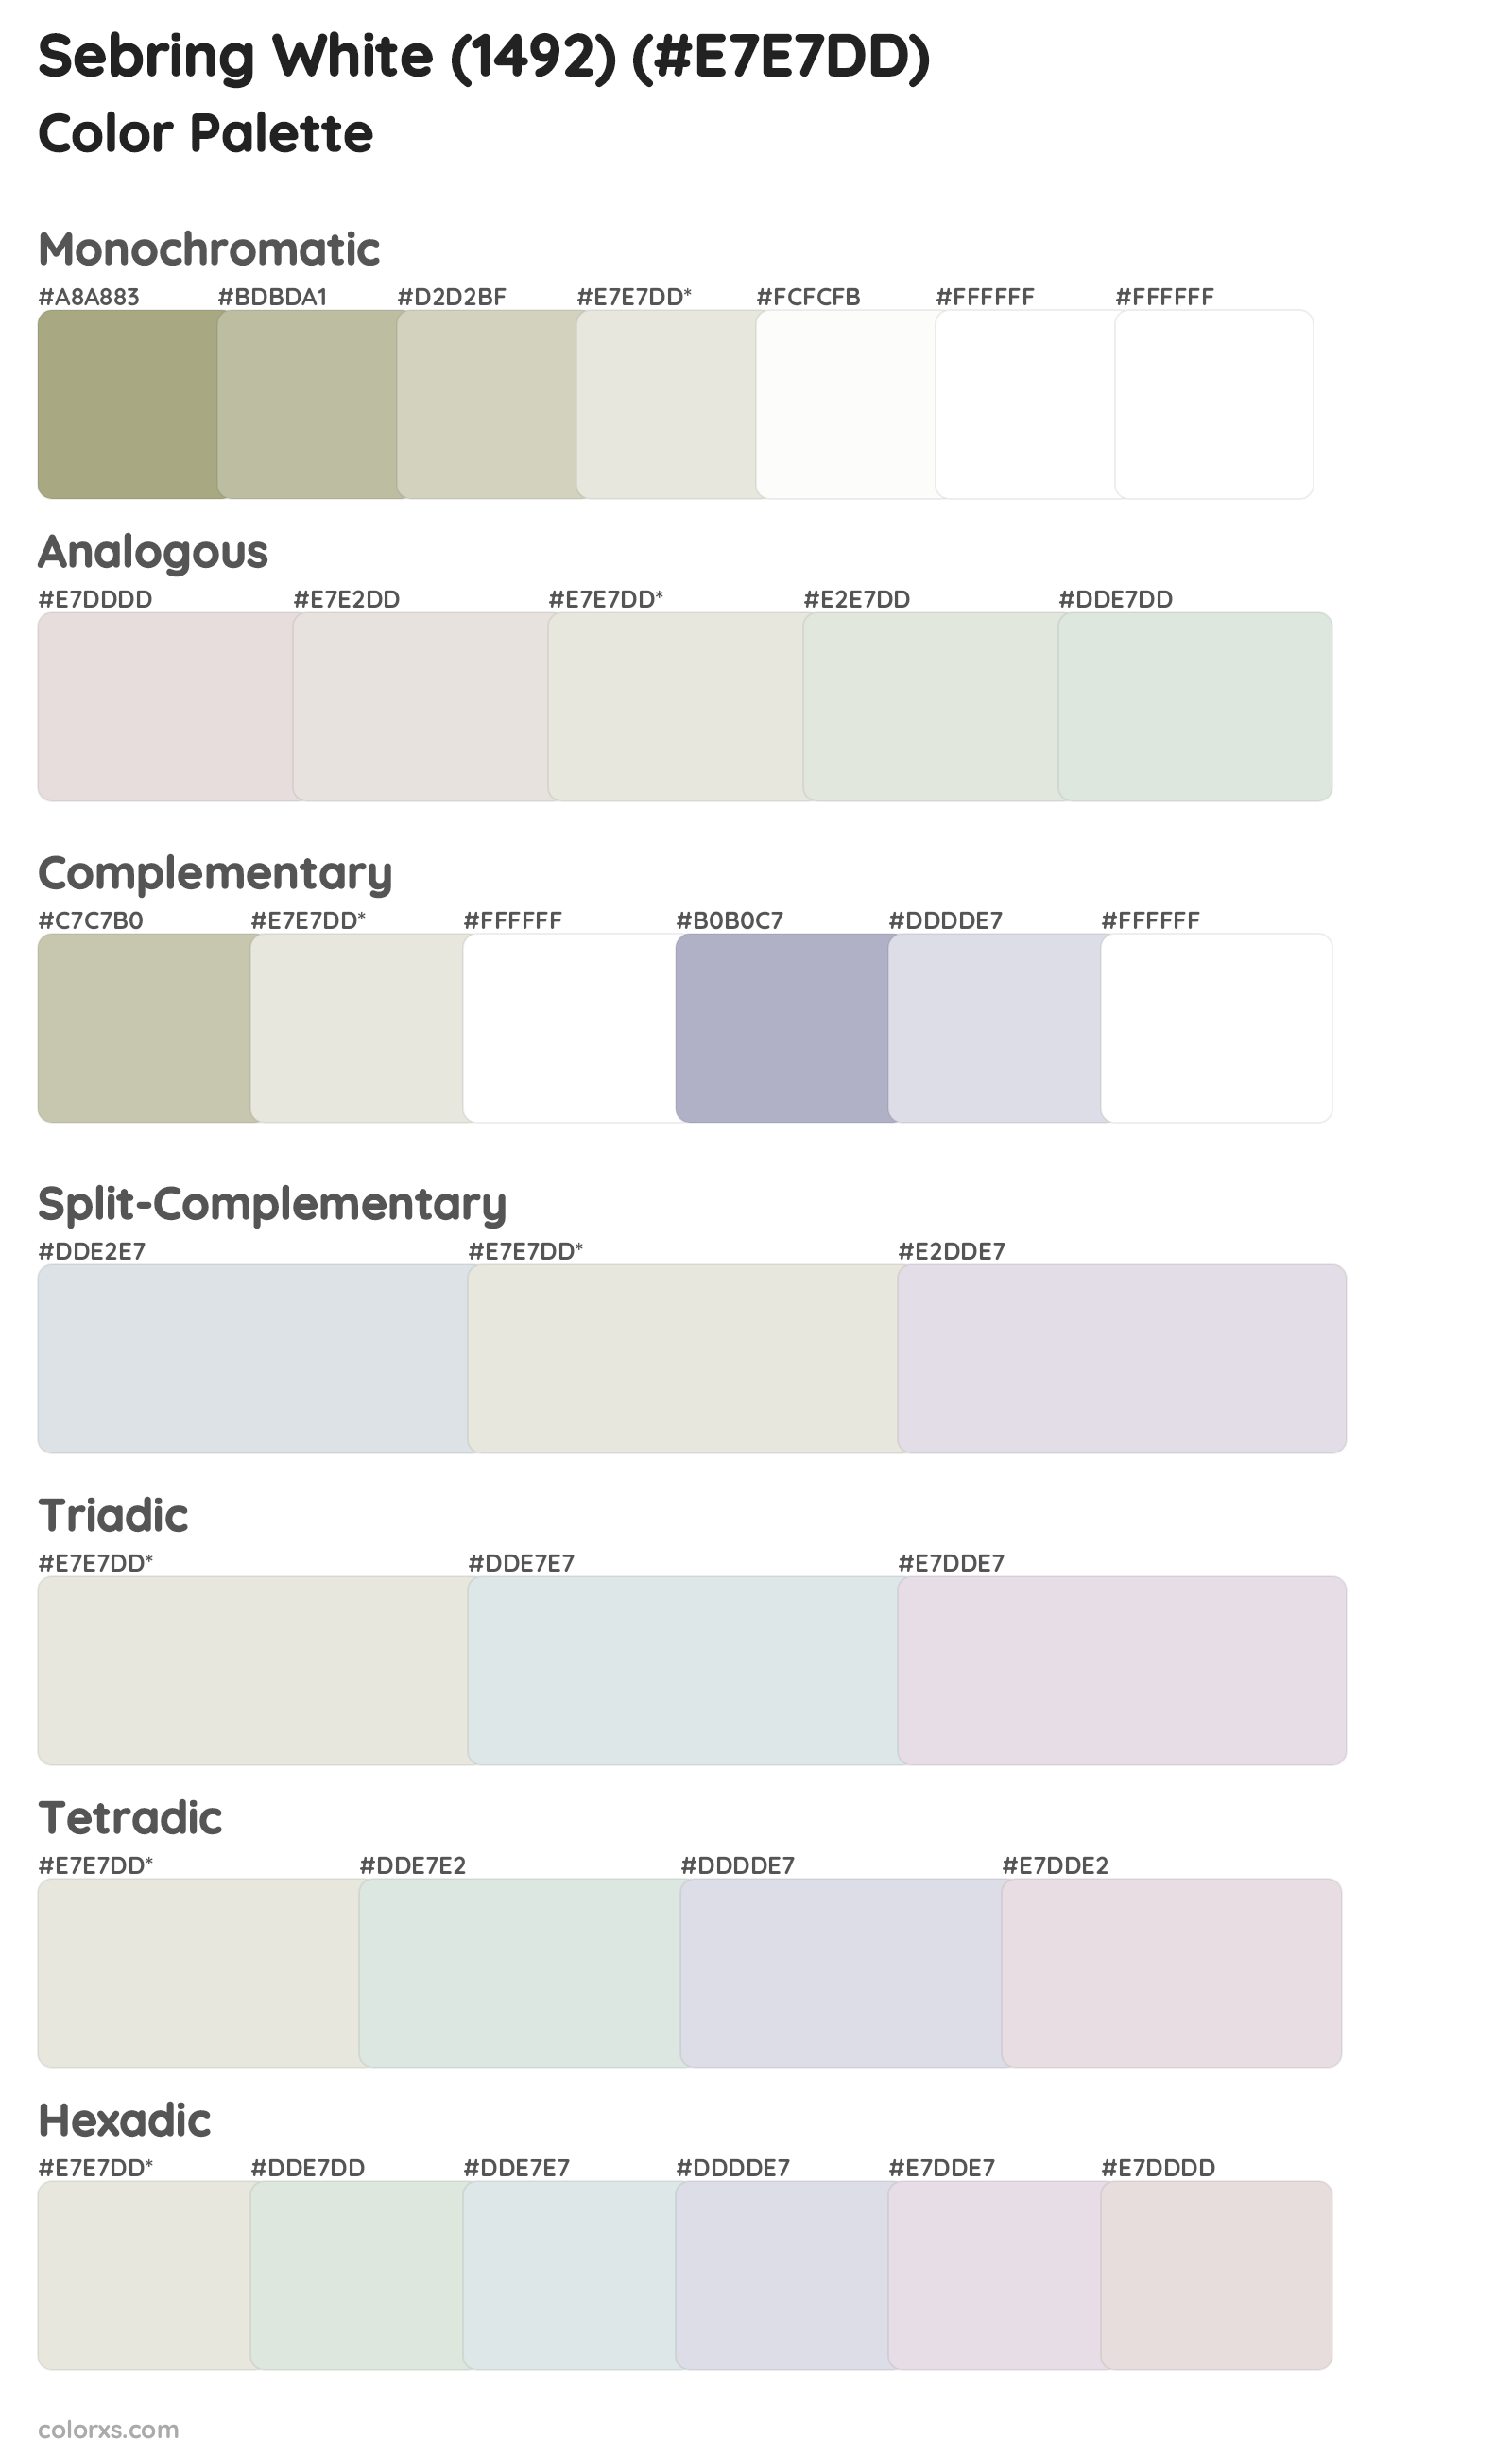 Sebring White (1492) Color Scheme Palettes